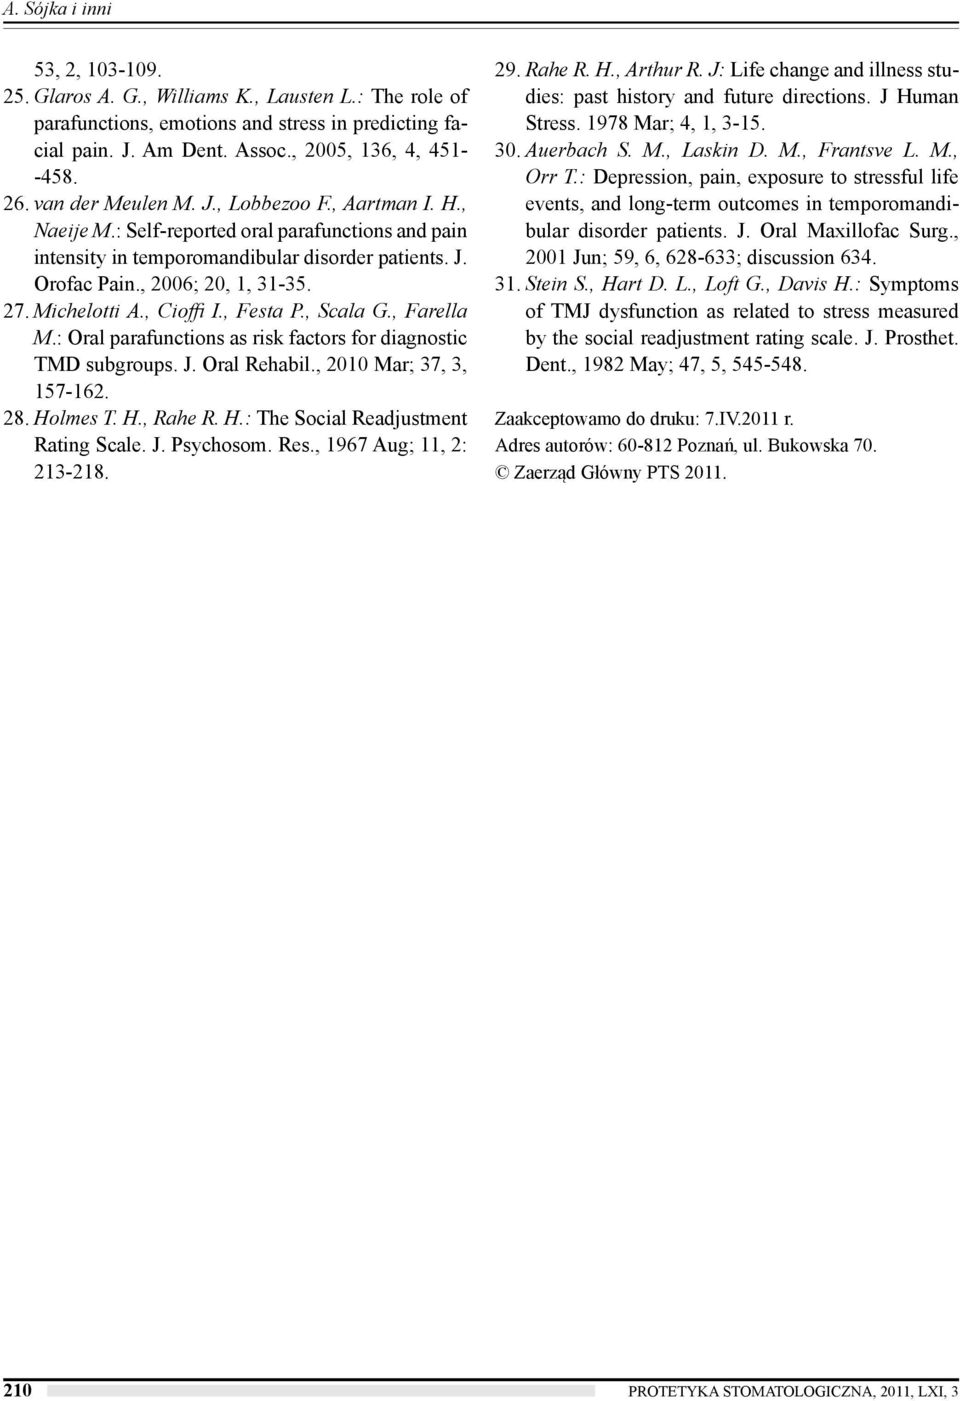 Michelotti A., Cioffi I., Festa P., Scala G., Farella M.: Oral parafunctions as risk factors for diagnostic TMD subgroups. J. Oral Rehabil., 2010 Mar; 37, 3, 157-162. 28. Ho